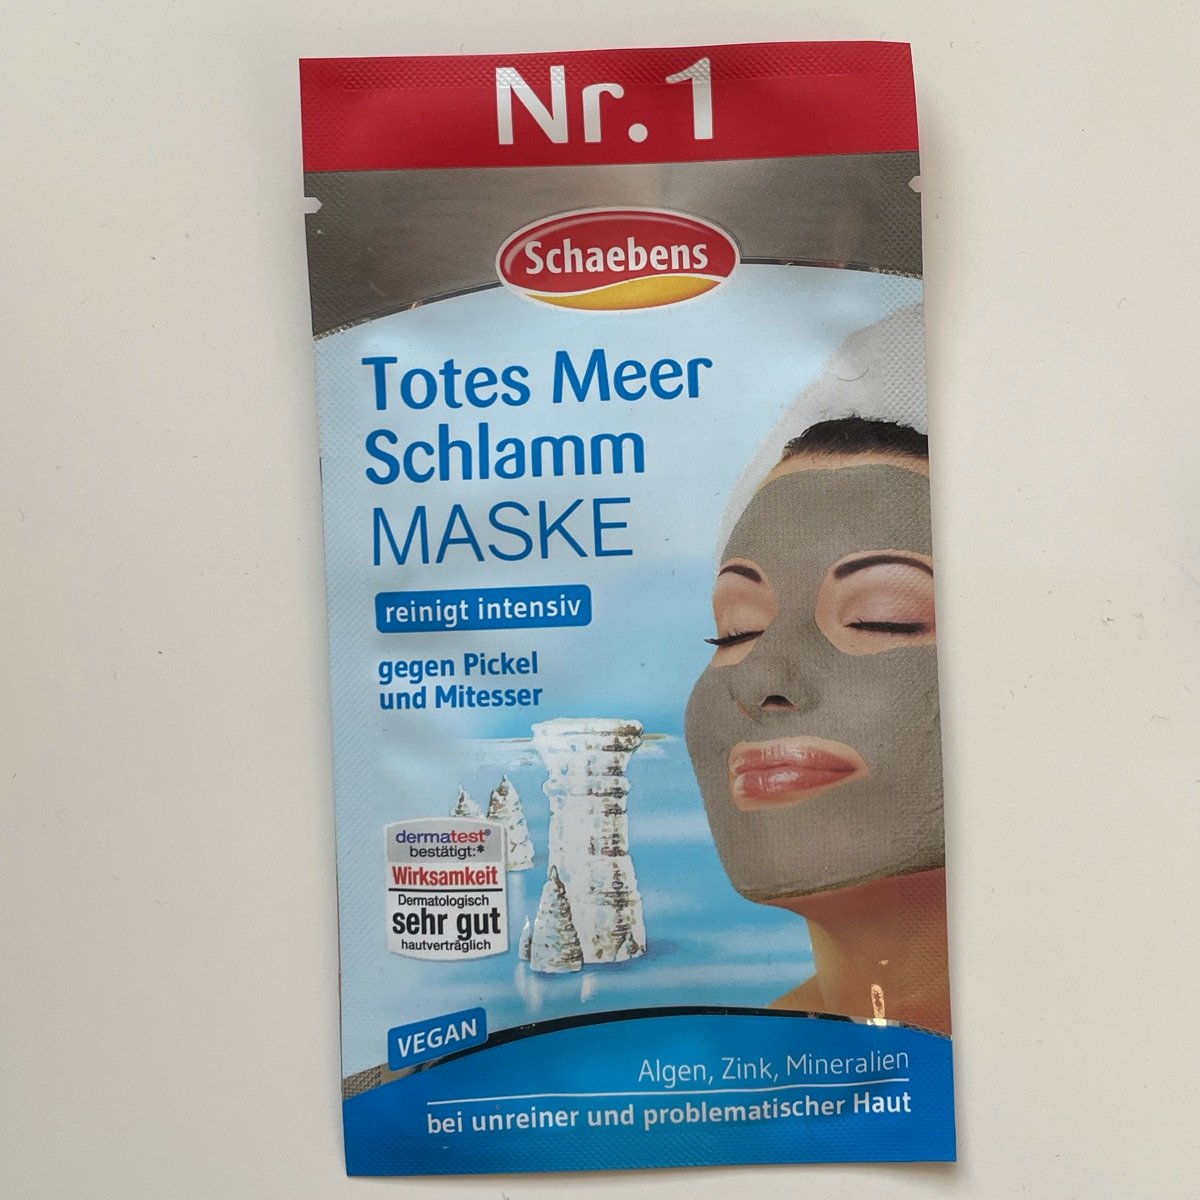 Schaebens Totes meer schlamm maske Reviews | abillion